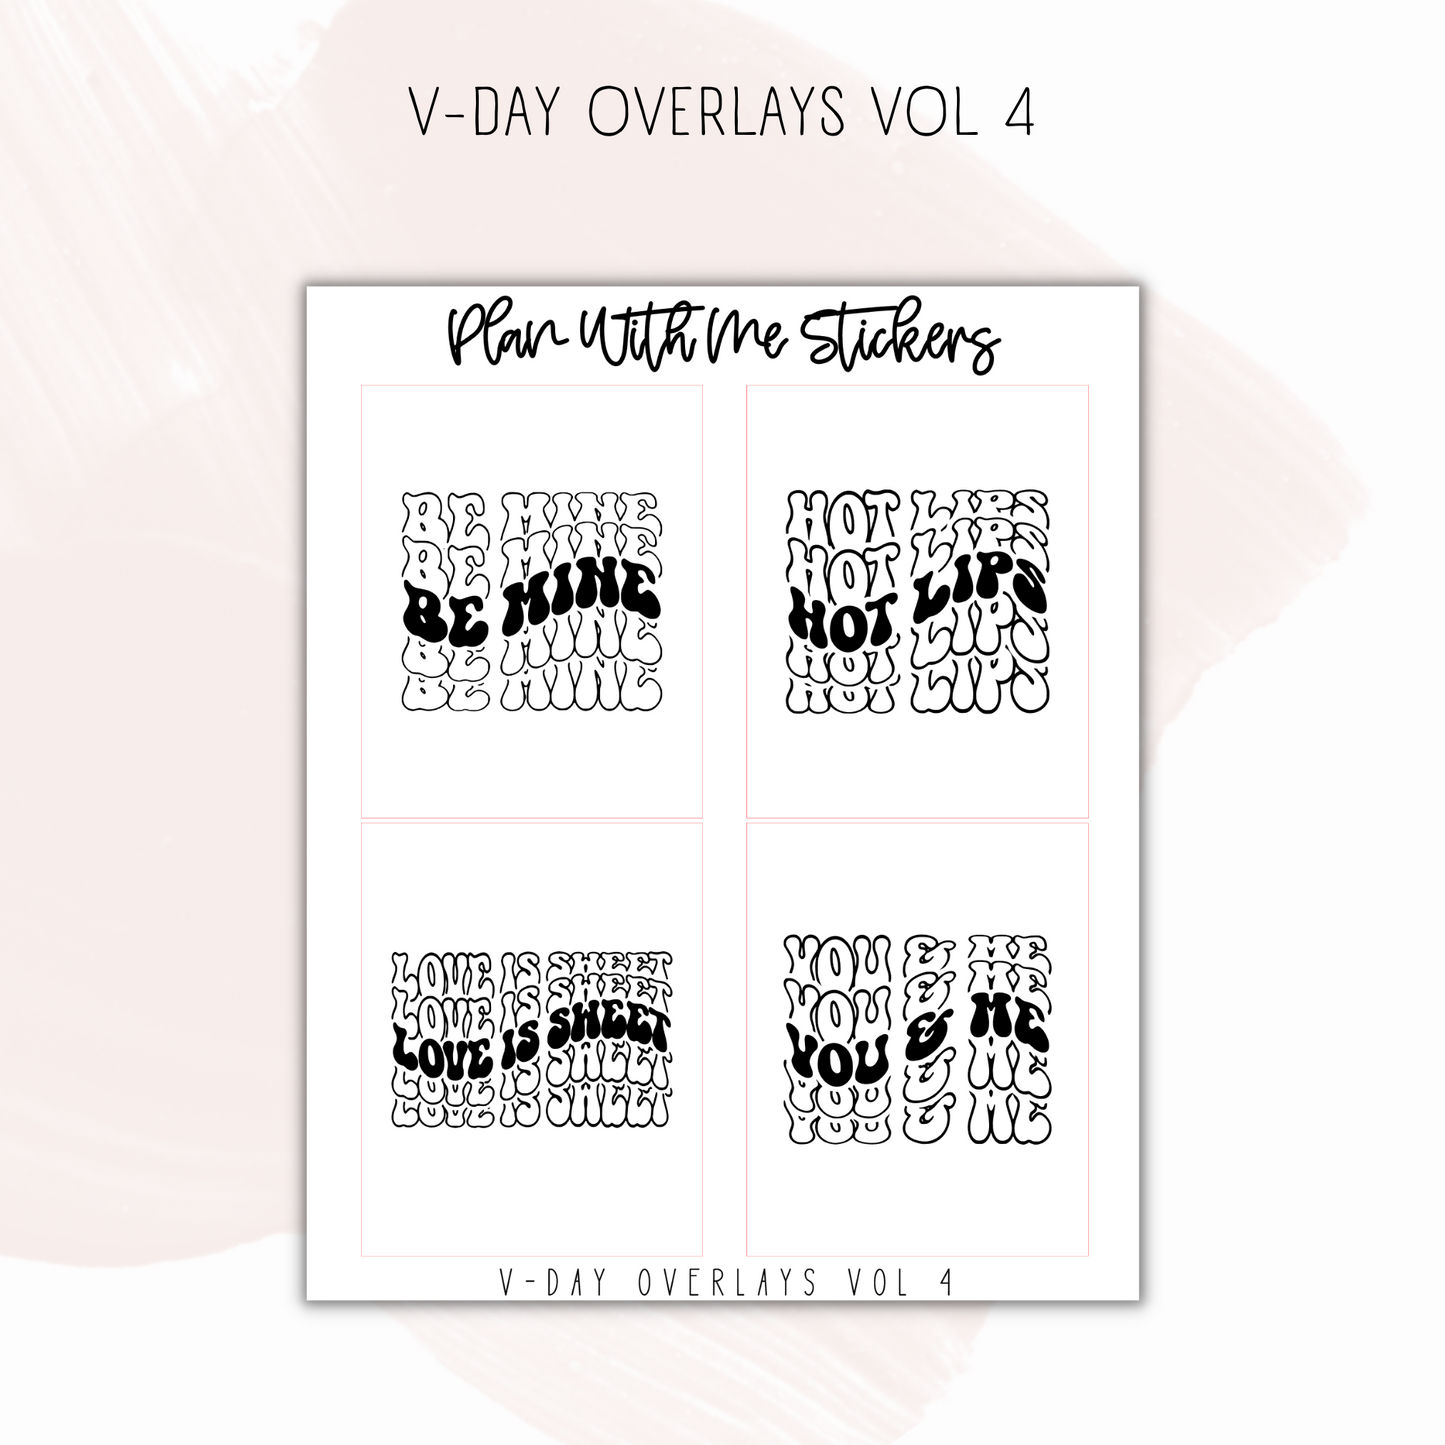 V-Day Overlays Vol 4